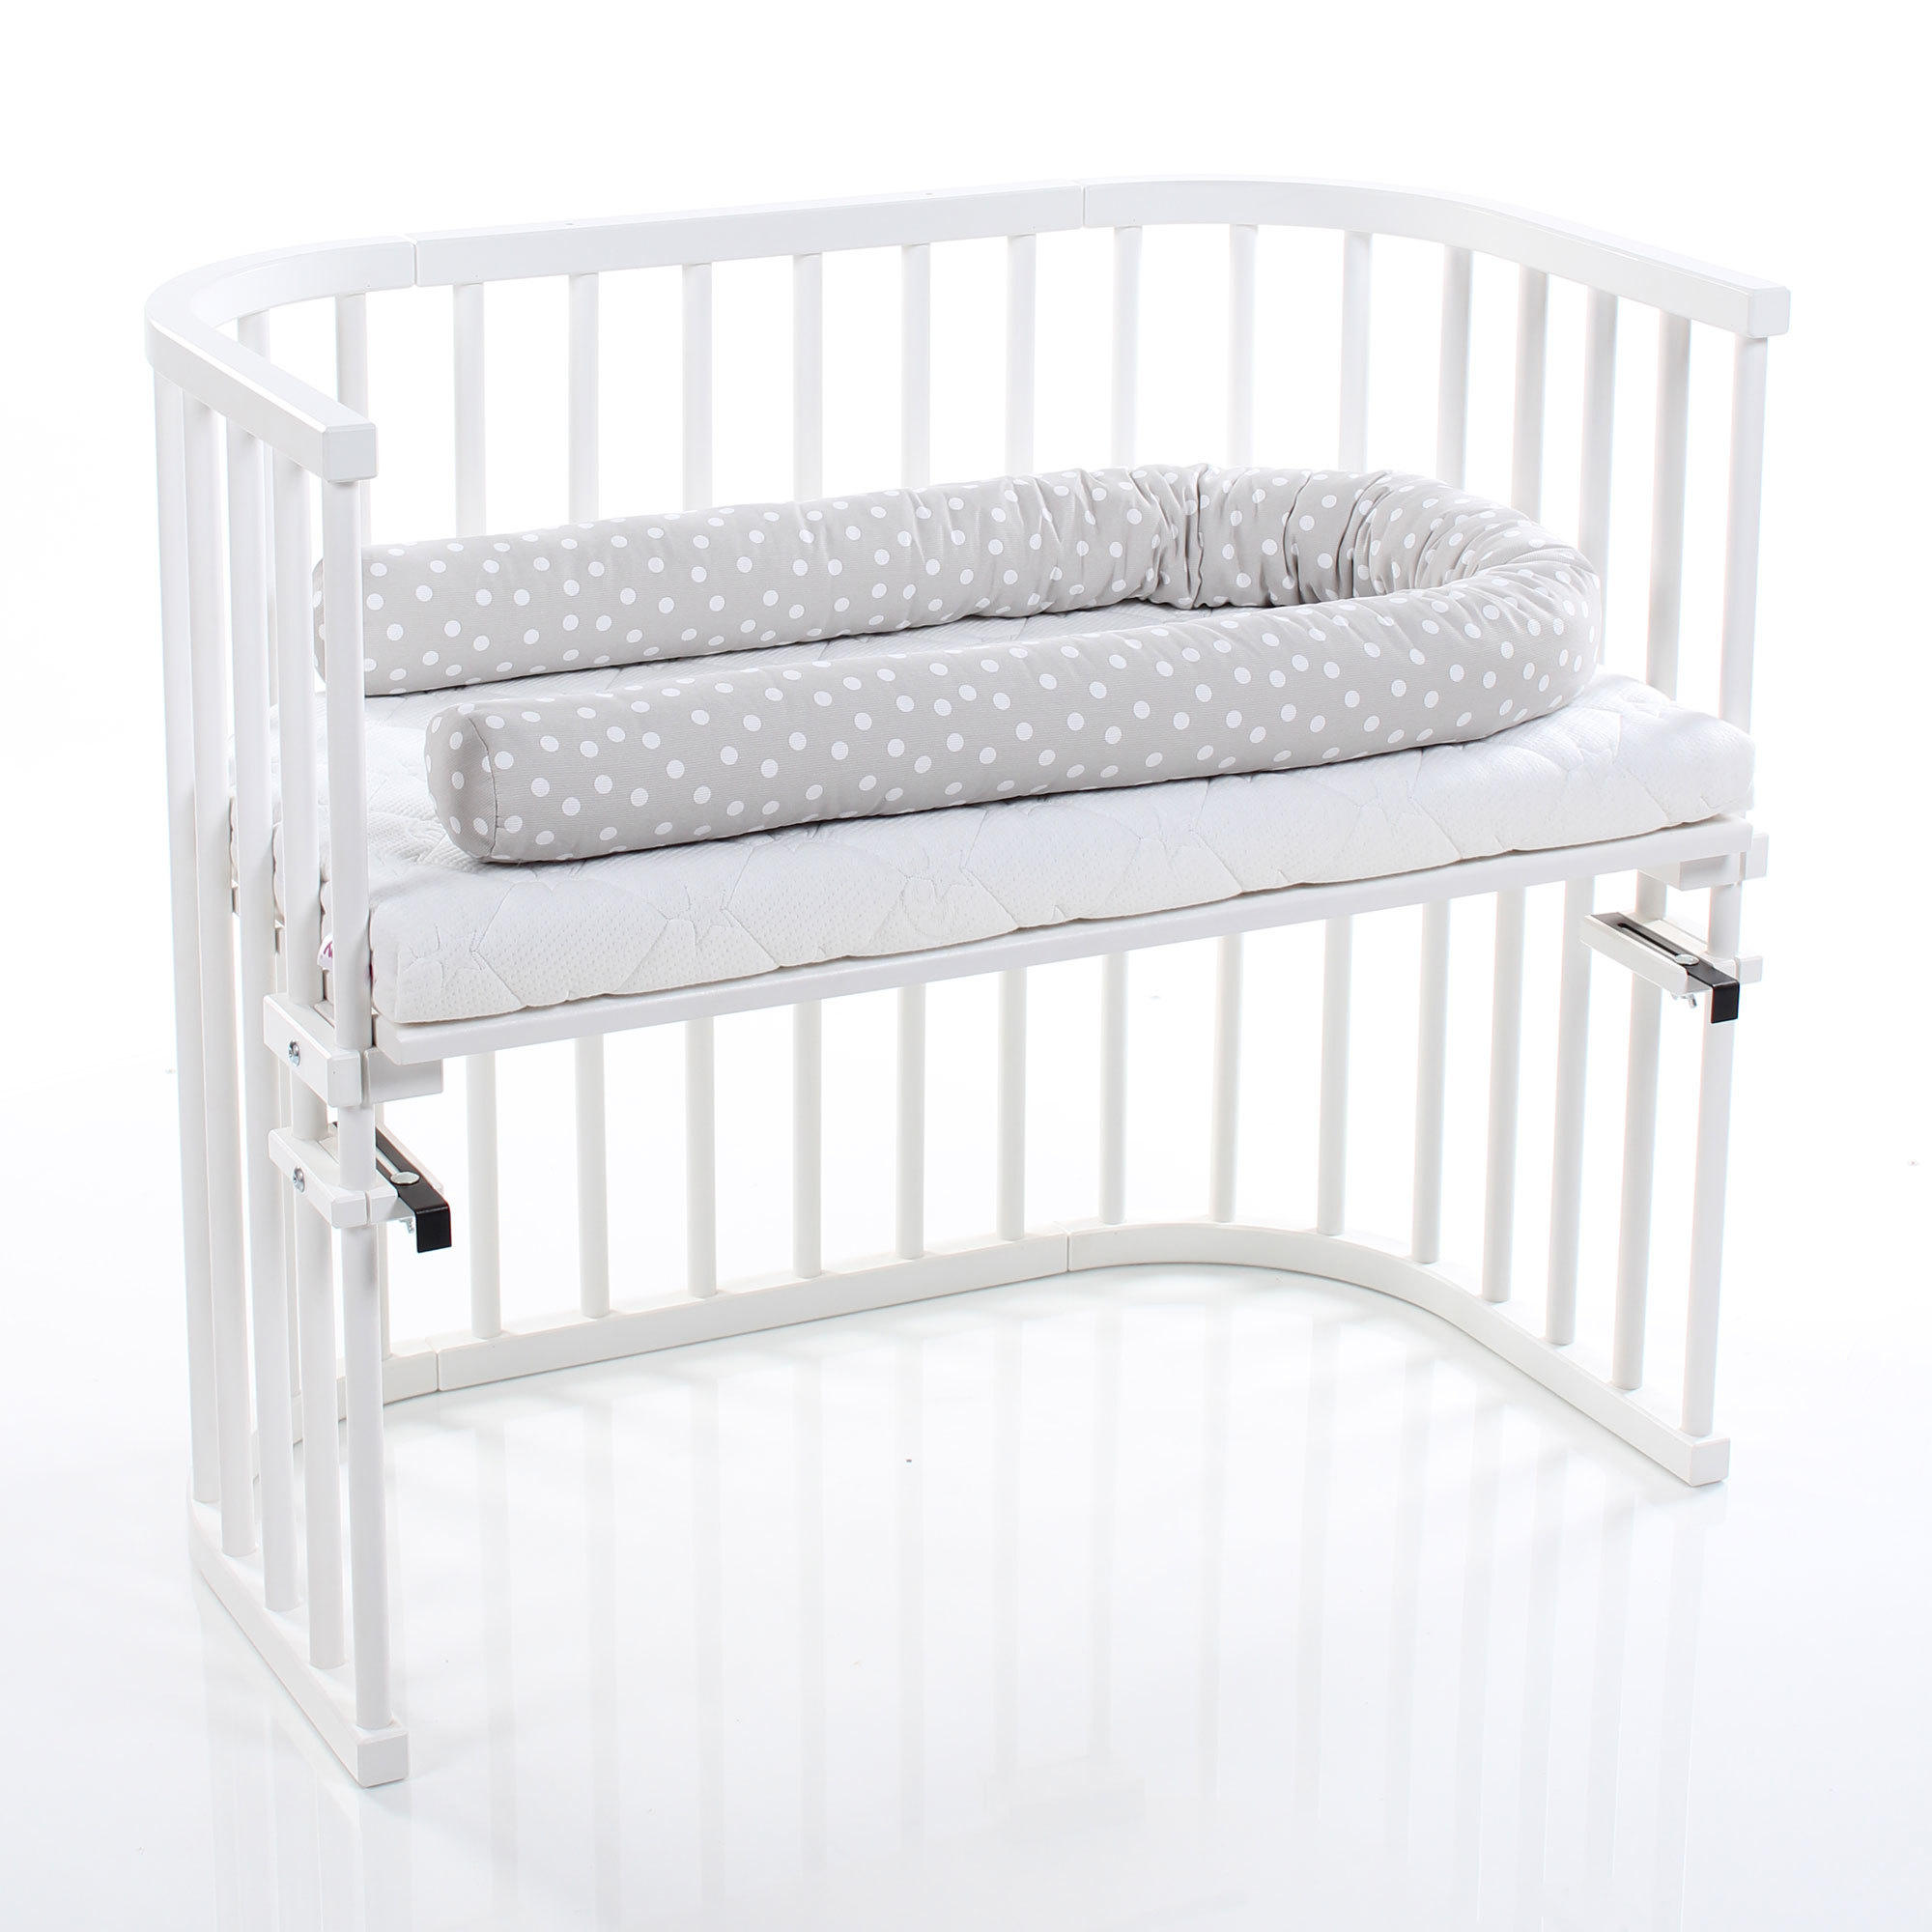 Nestchenschlage Piqué Babybay   9/180 cm  - Hellgrau/Weiß, Basics, Textil (9/180cm) - Babybay